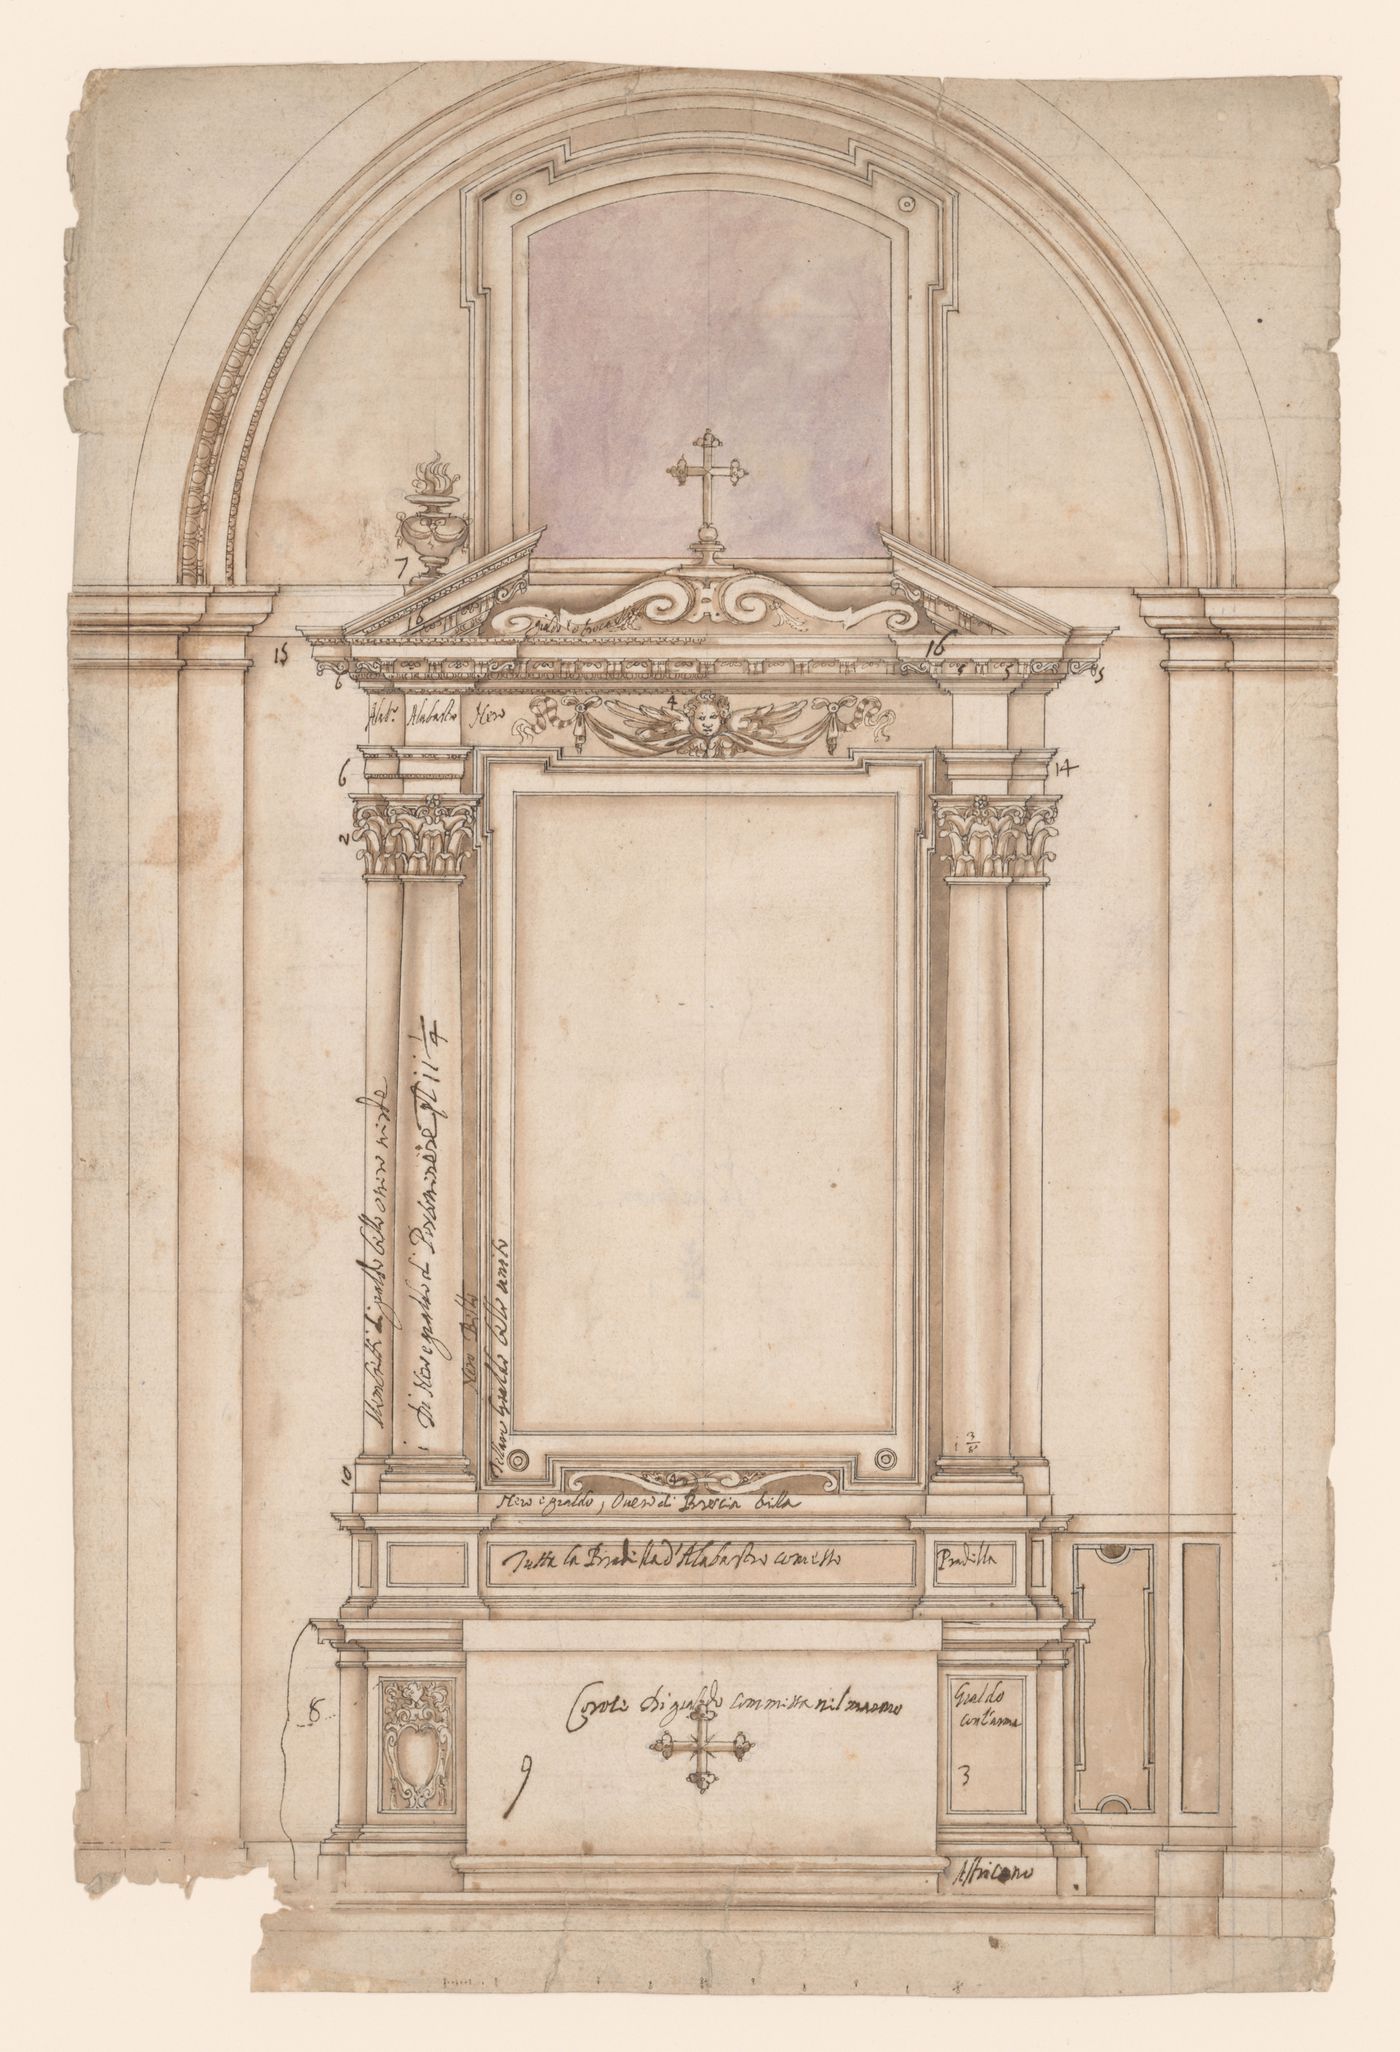 Elevation for an altarpiece frame with Corinthian columns and a broken pediment